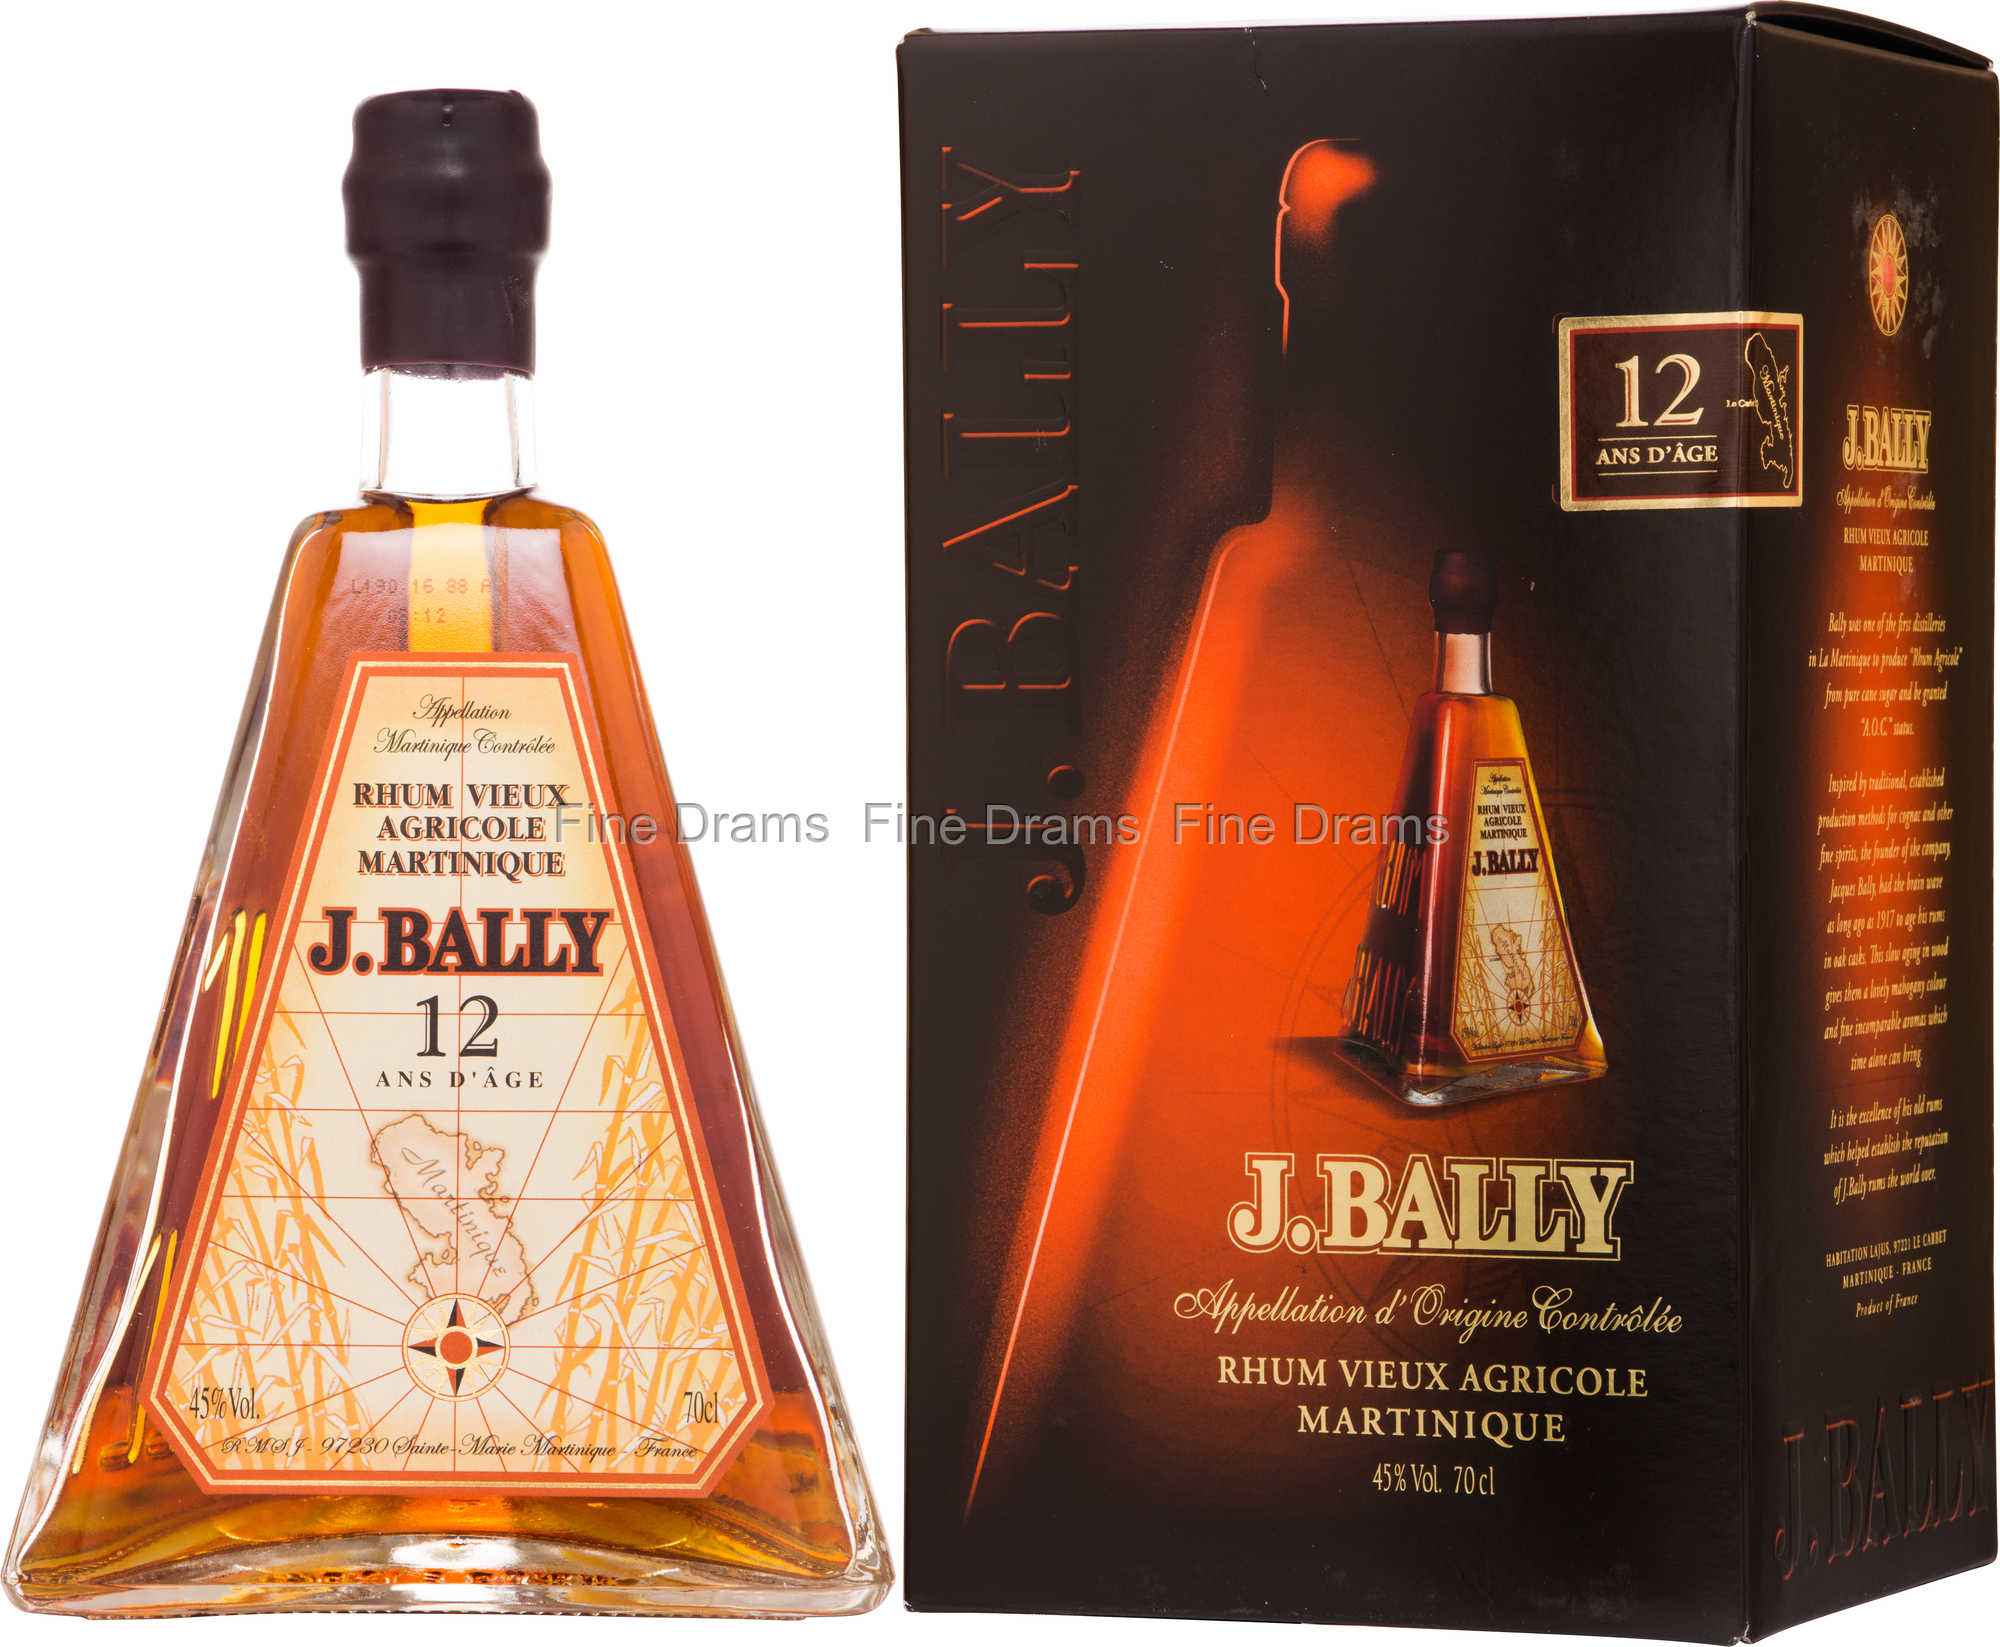 J. Bally Rhum Ambre Agricole Martiniuque 45% vol. Rum